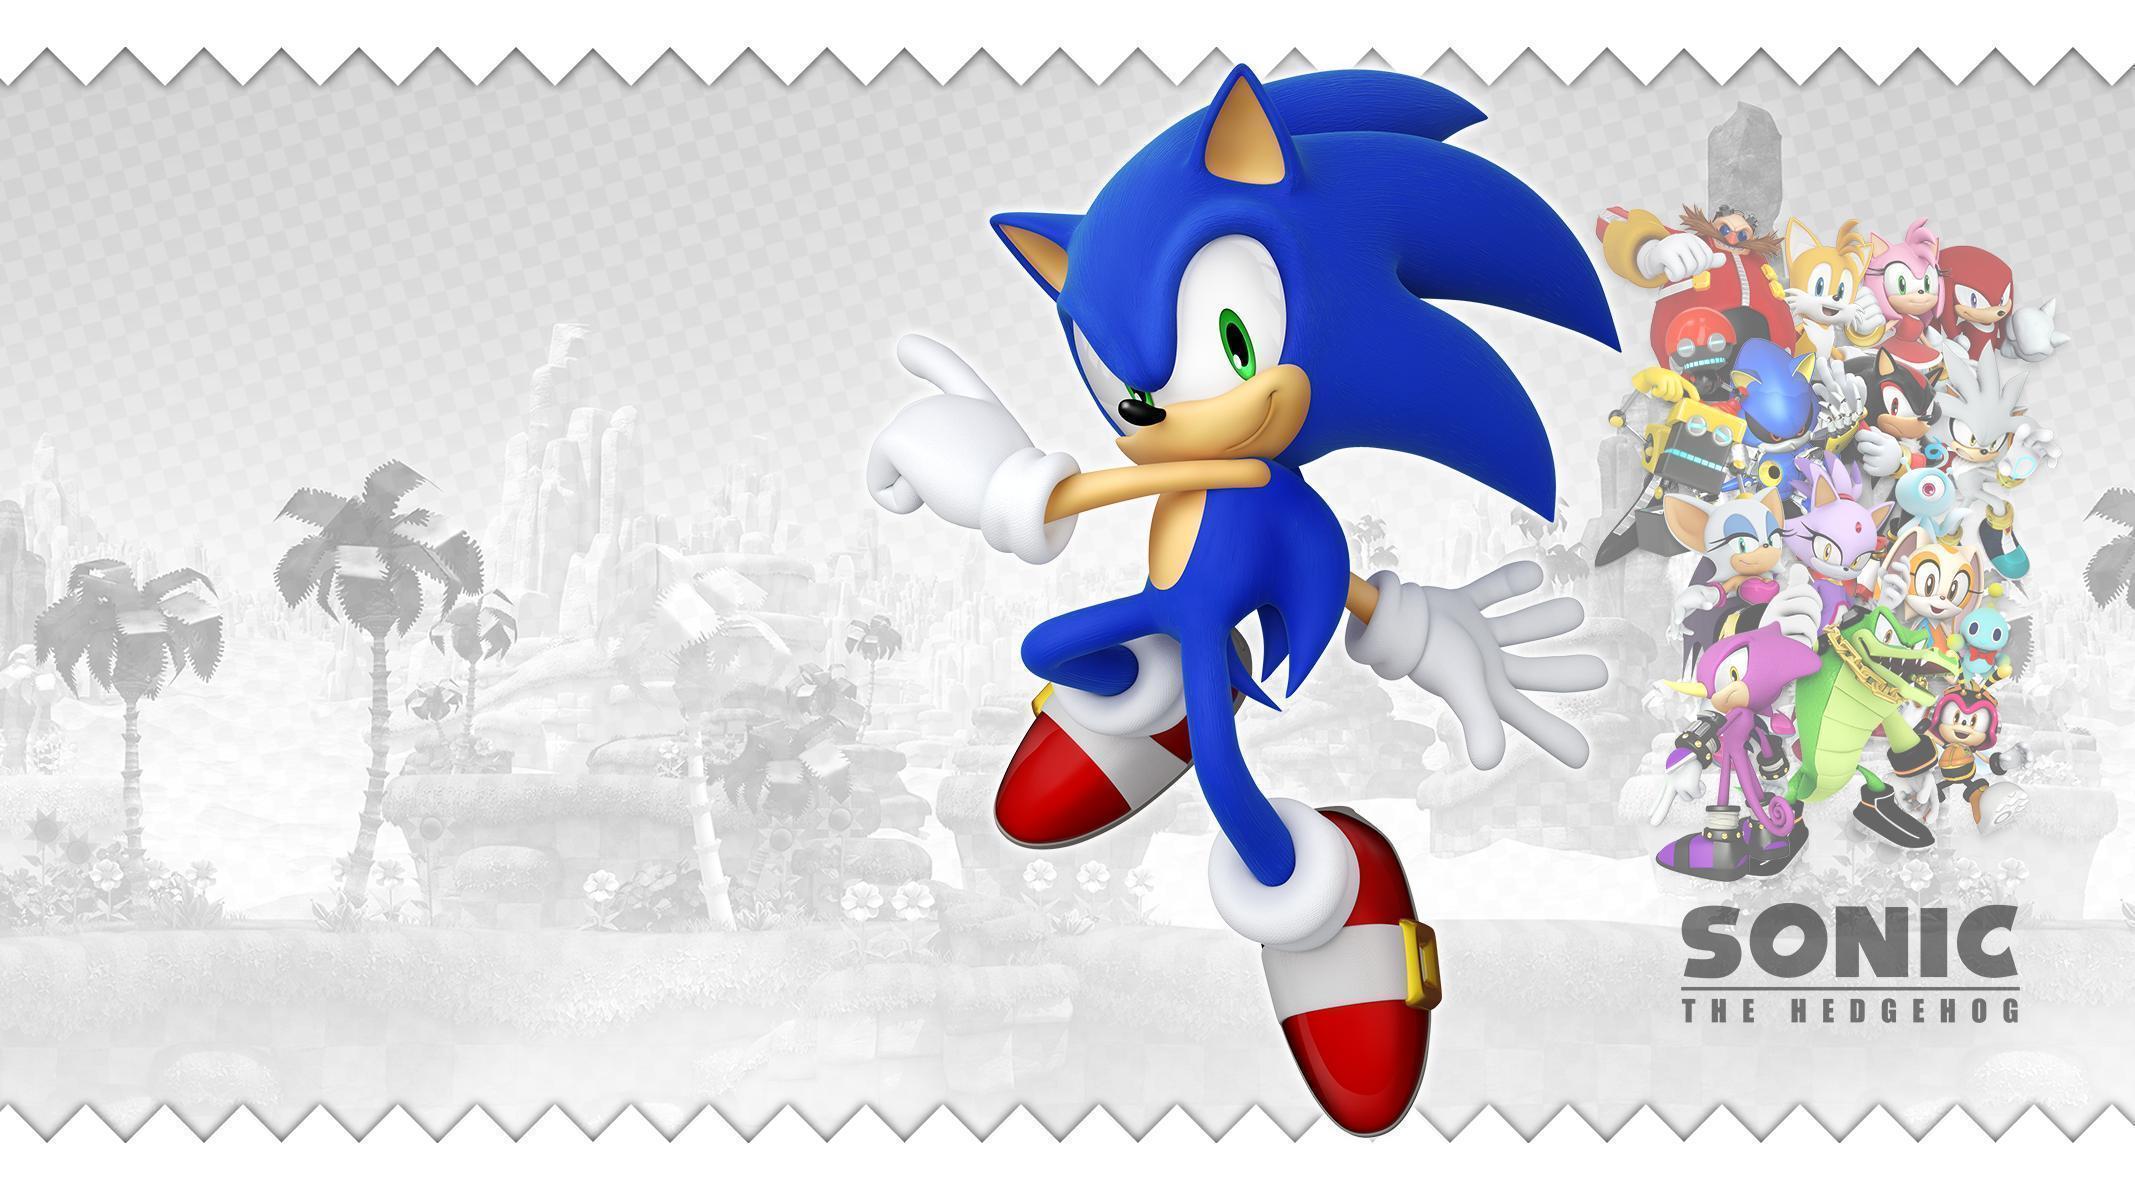 Darkspine Sonic The Hedgehog Wallpaper Image & Picture